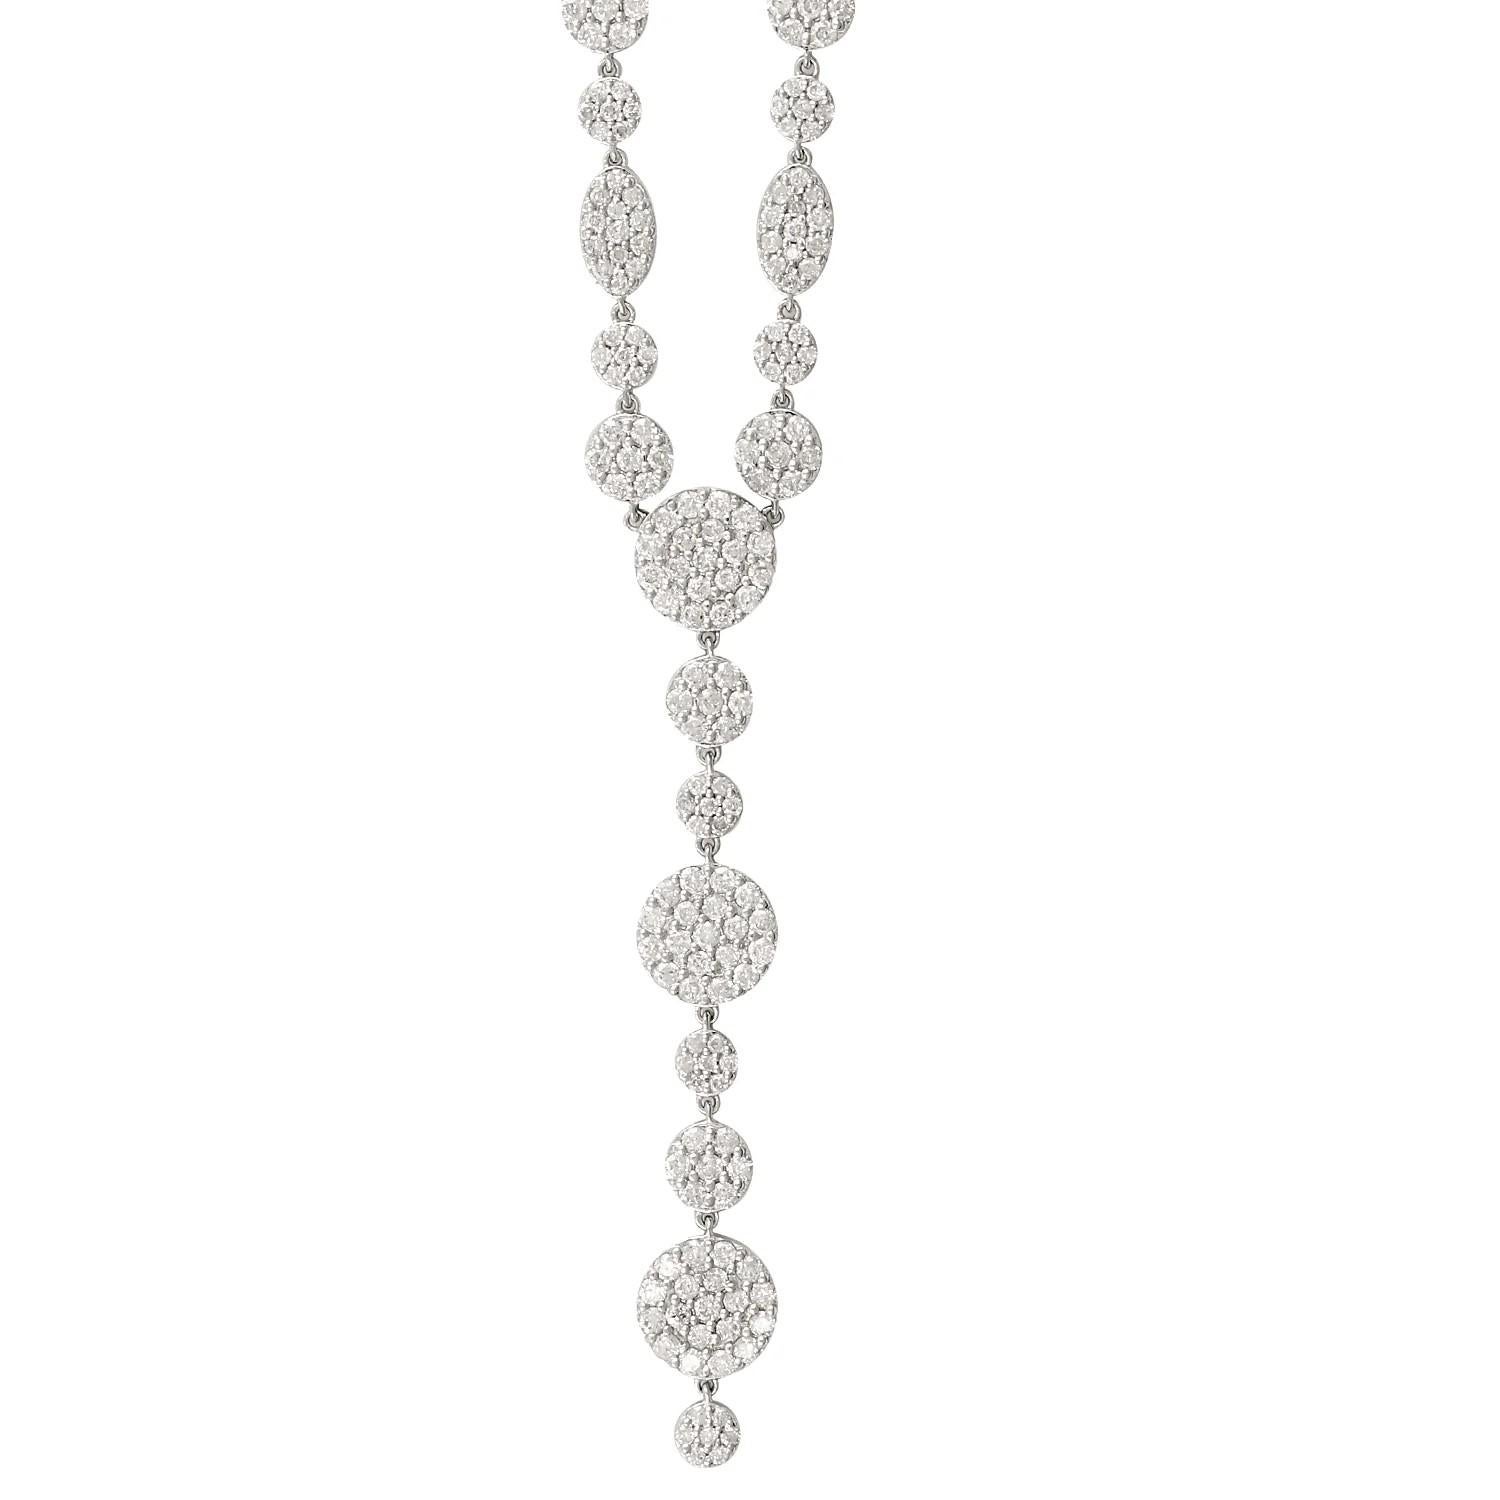 Mixed Cut Meghna Jewels 5.08 Carat 14 Karat White Gold Diamond Necklace For Sale